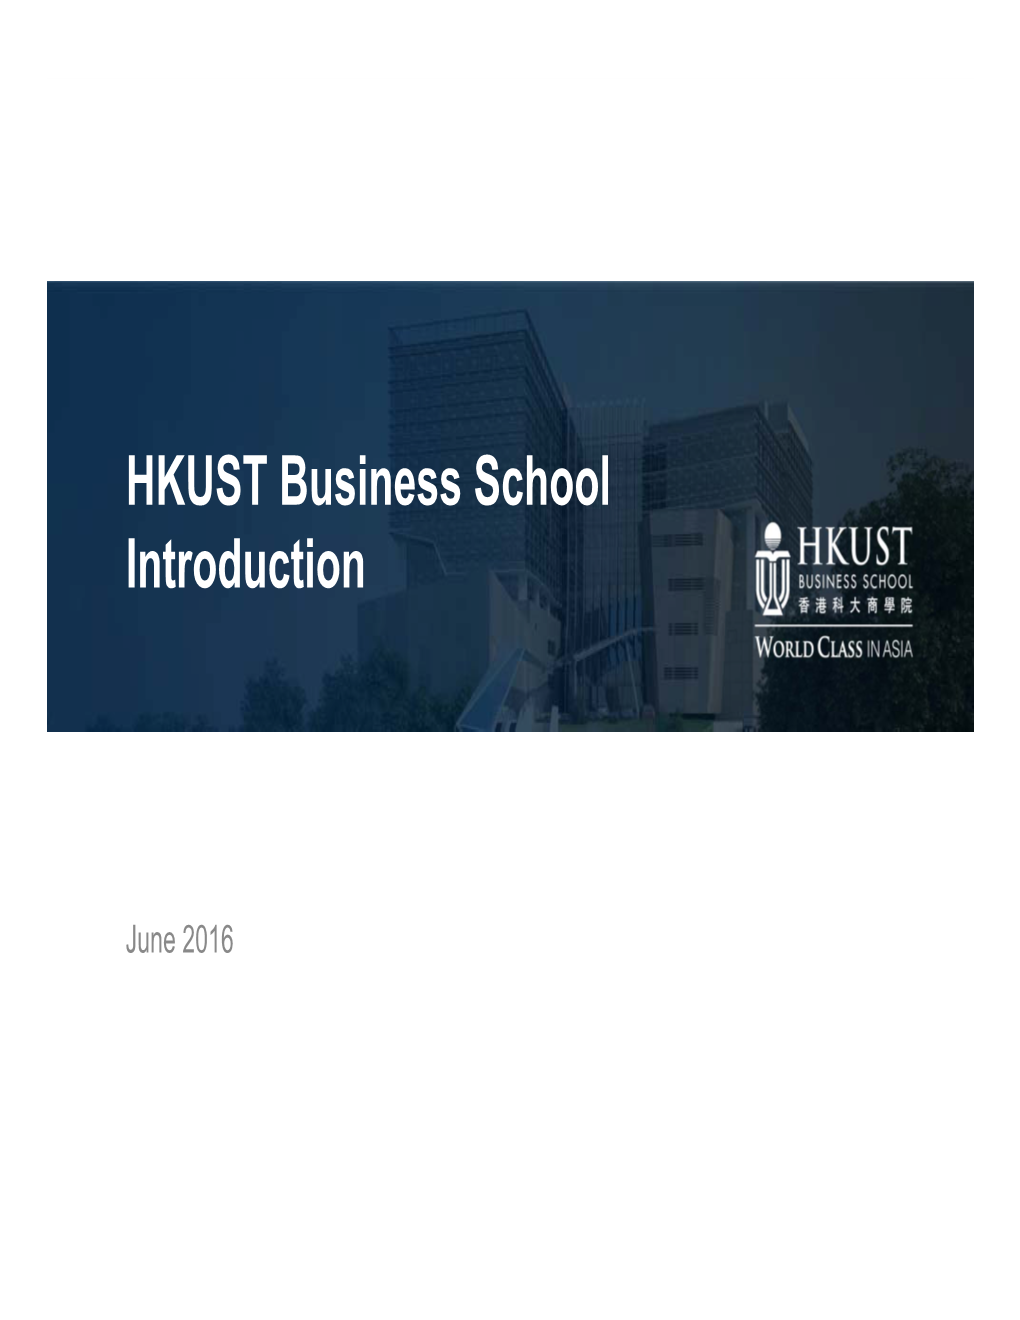 HKUST Business School Introduction